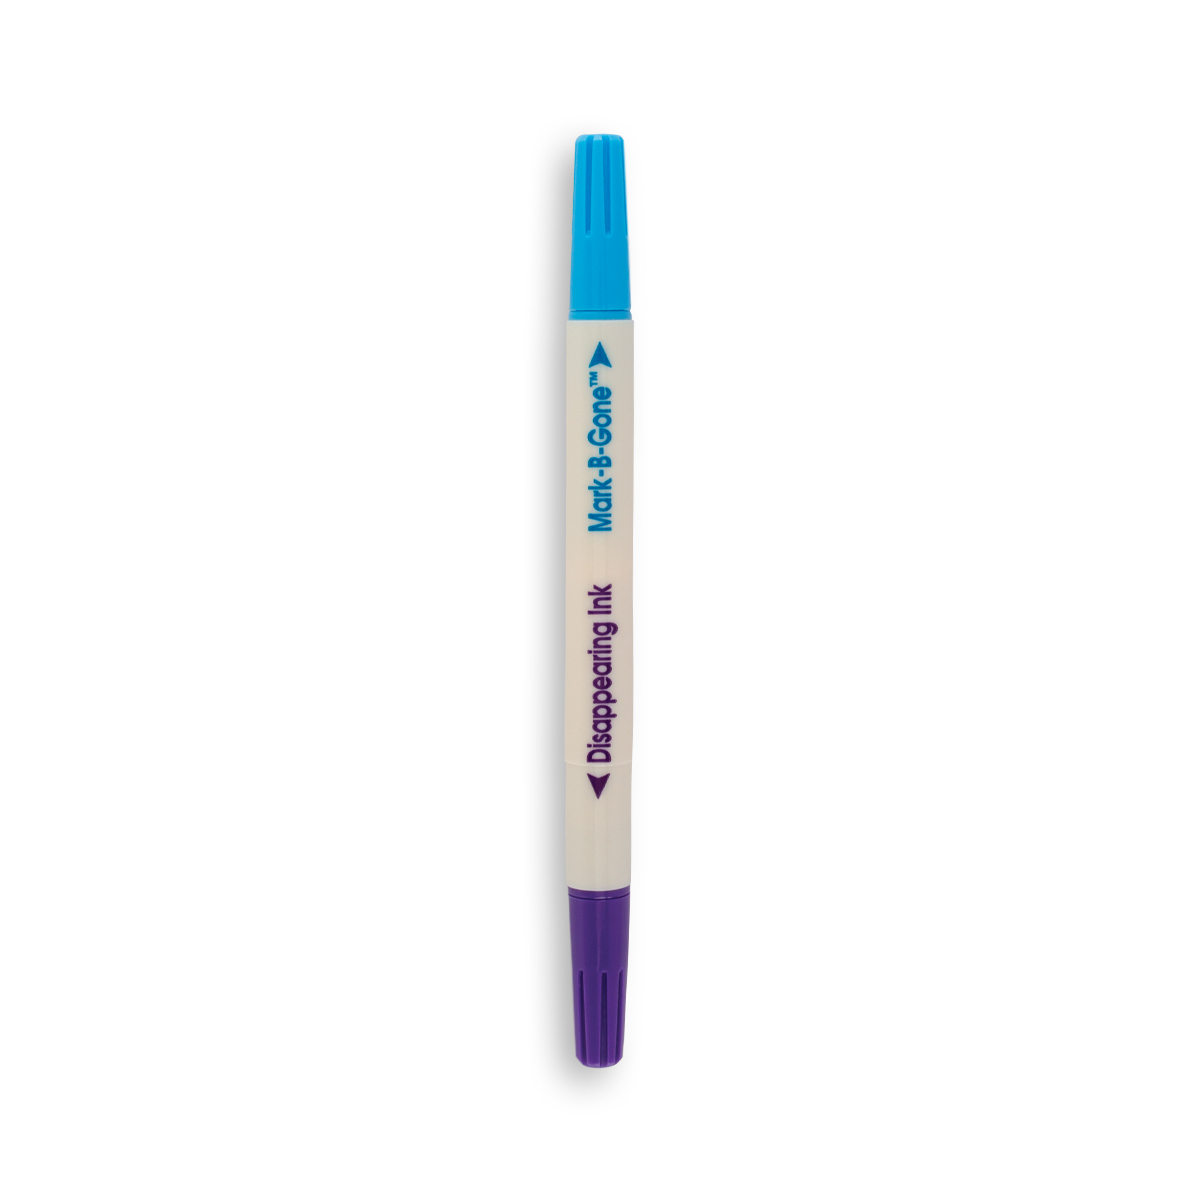 Light Blue, Water Soluble Dritz 683-15 Marking Pencil